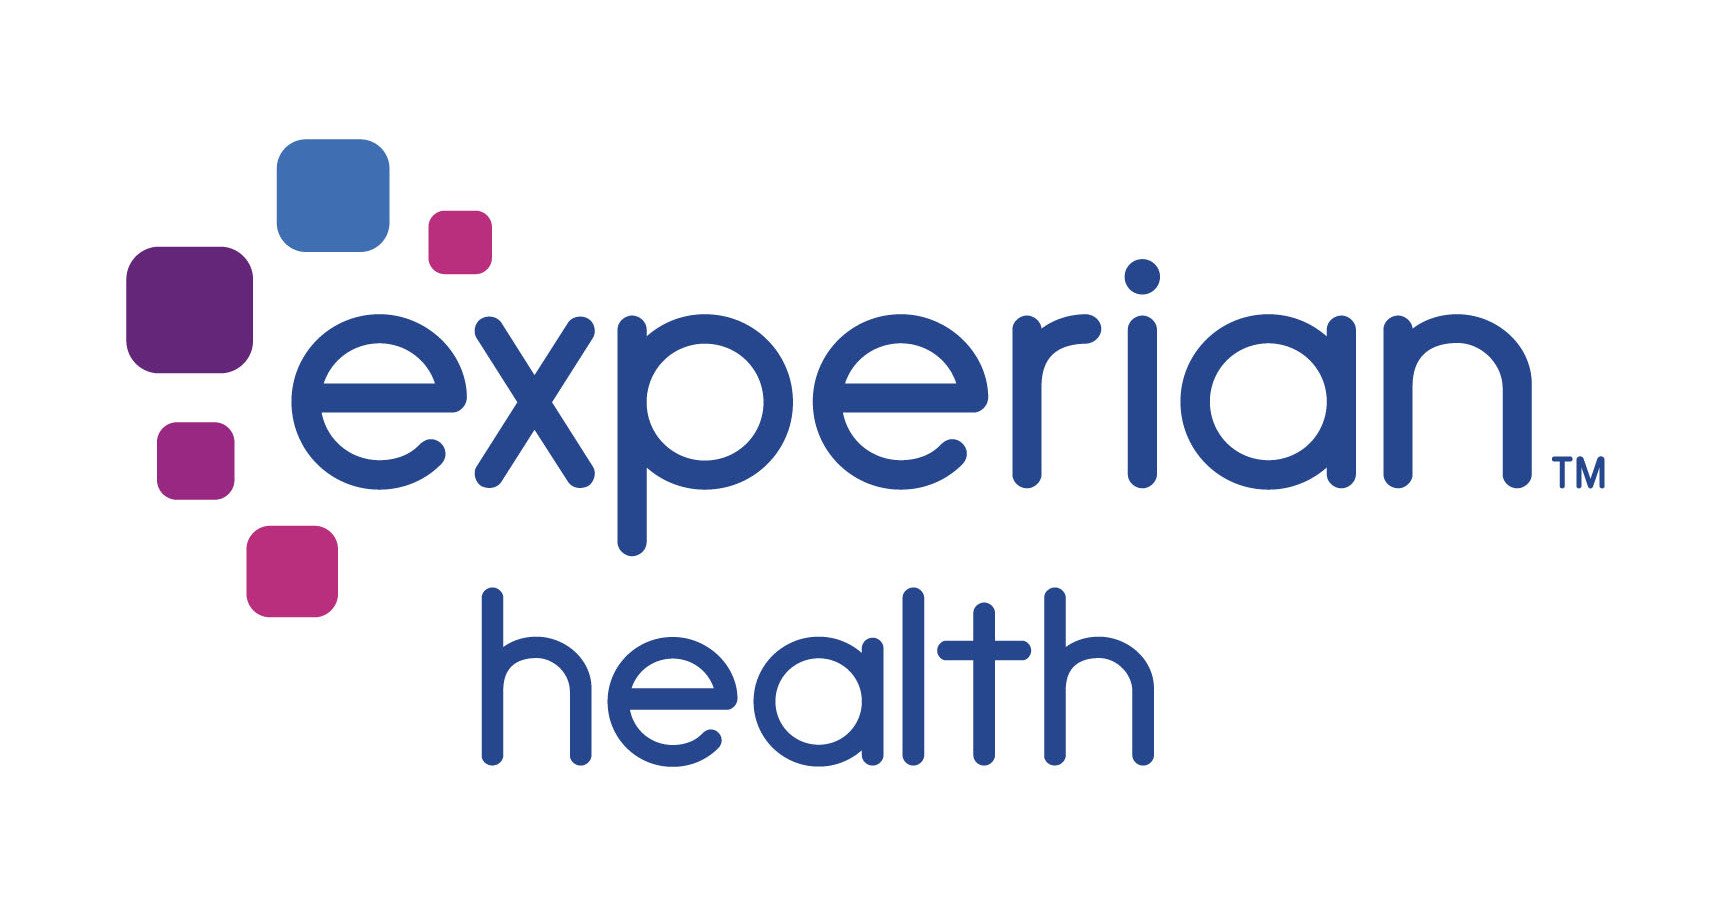 experian_healthcare